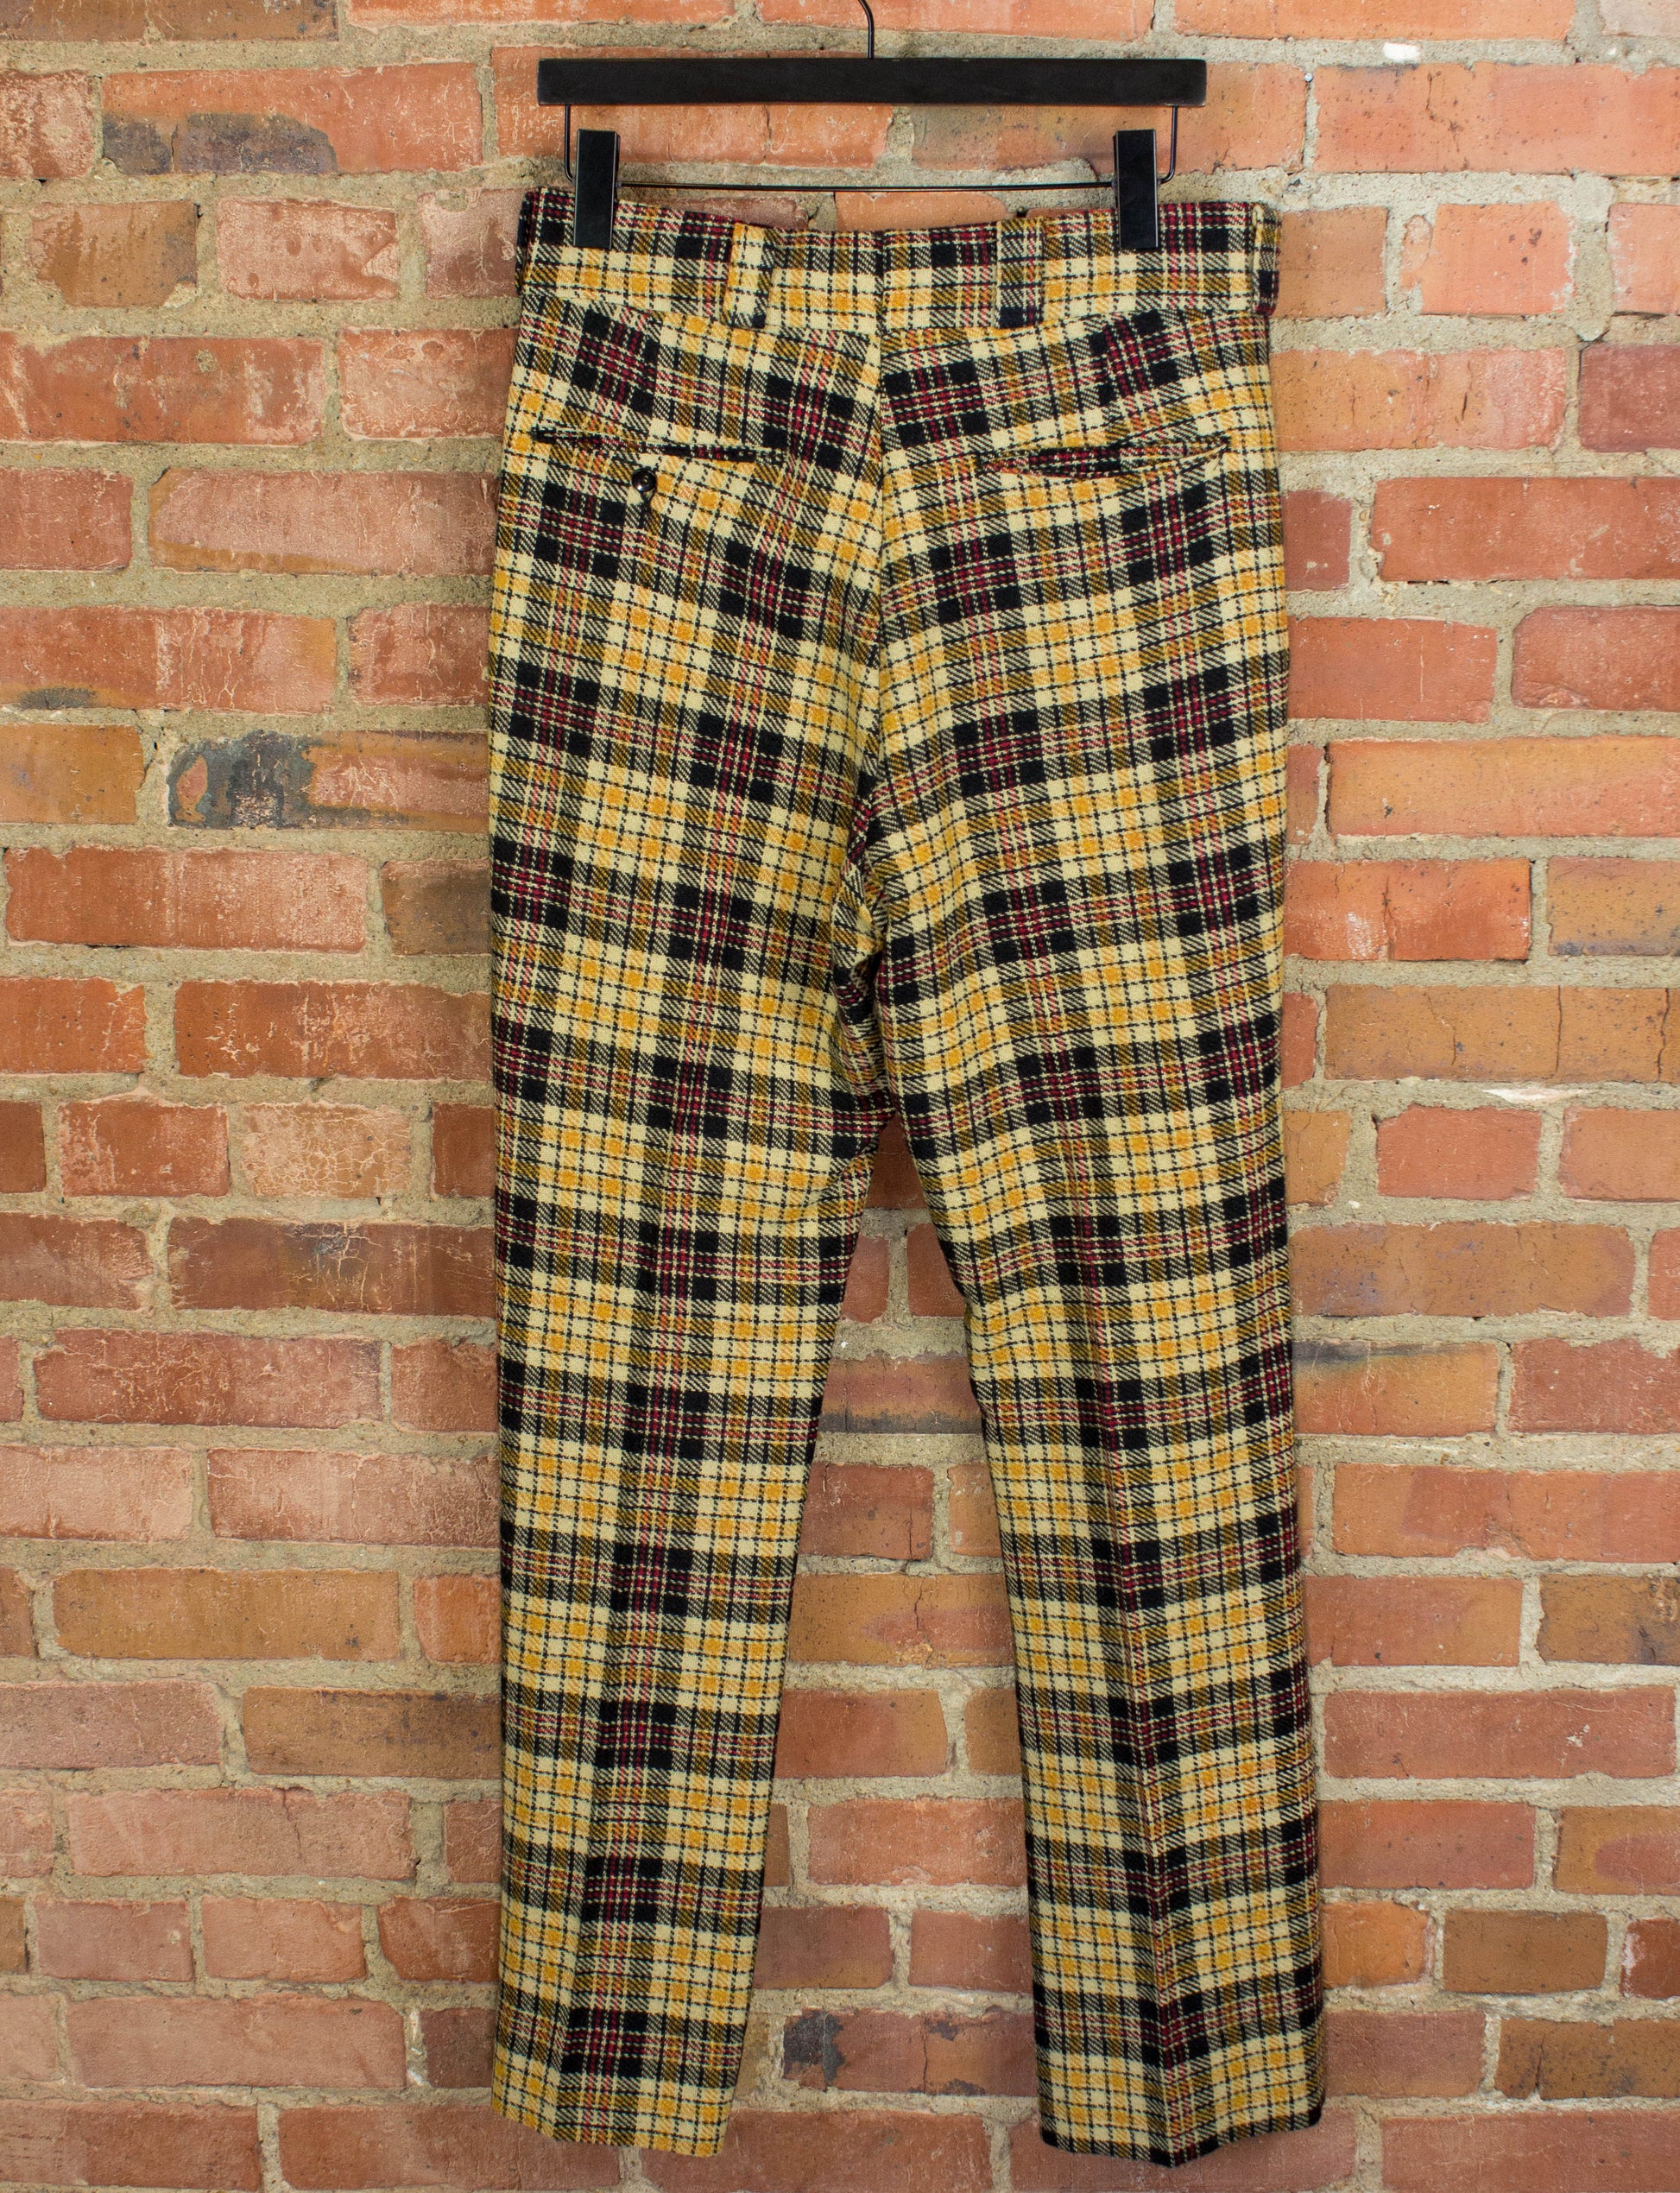 Vintage 70s Yellow Red and Black Plaid Wool Slacks Size 32x32